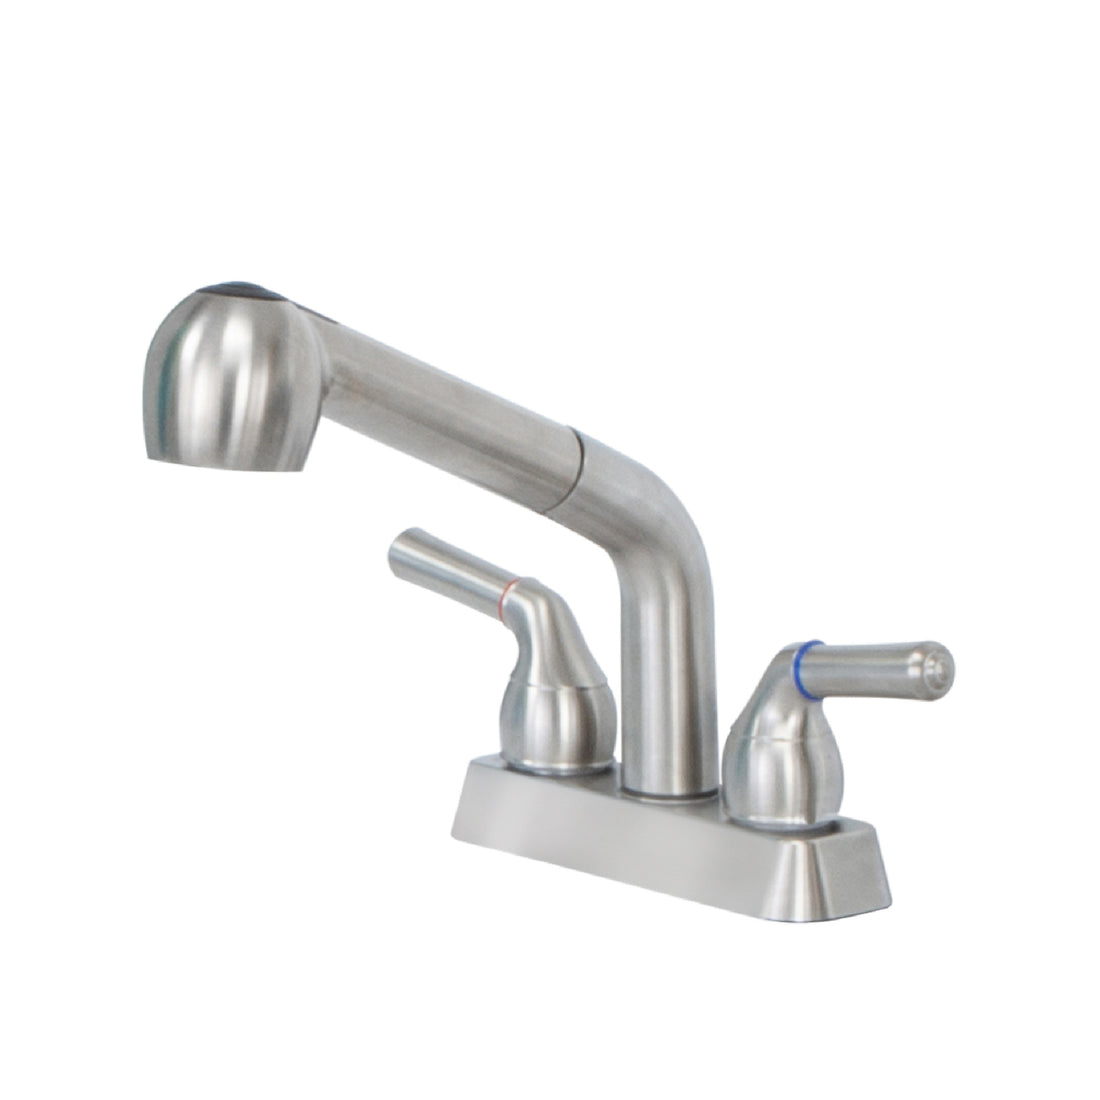 Tehila Stainless Steel Finish Pull-Out Faucet - Utility sinks vanites Tehila